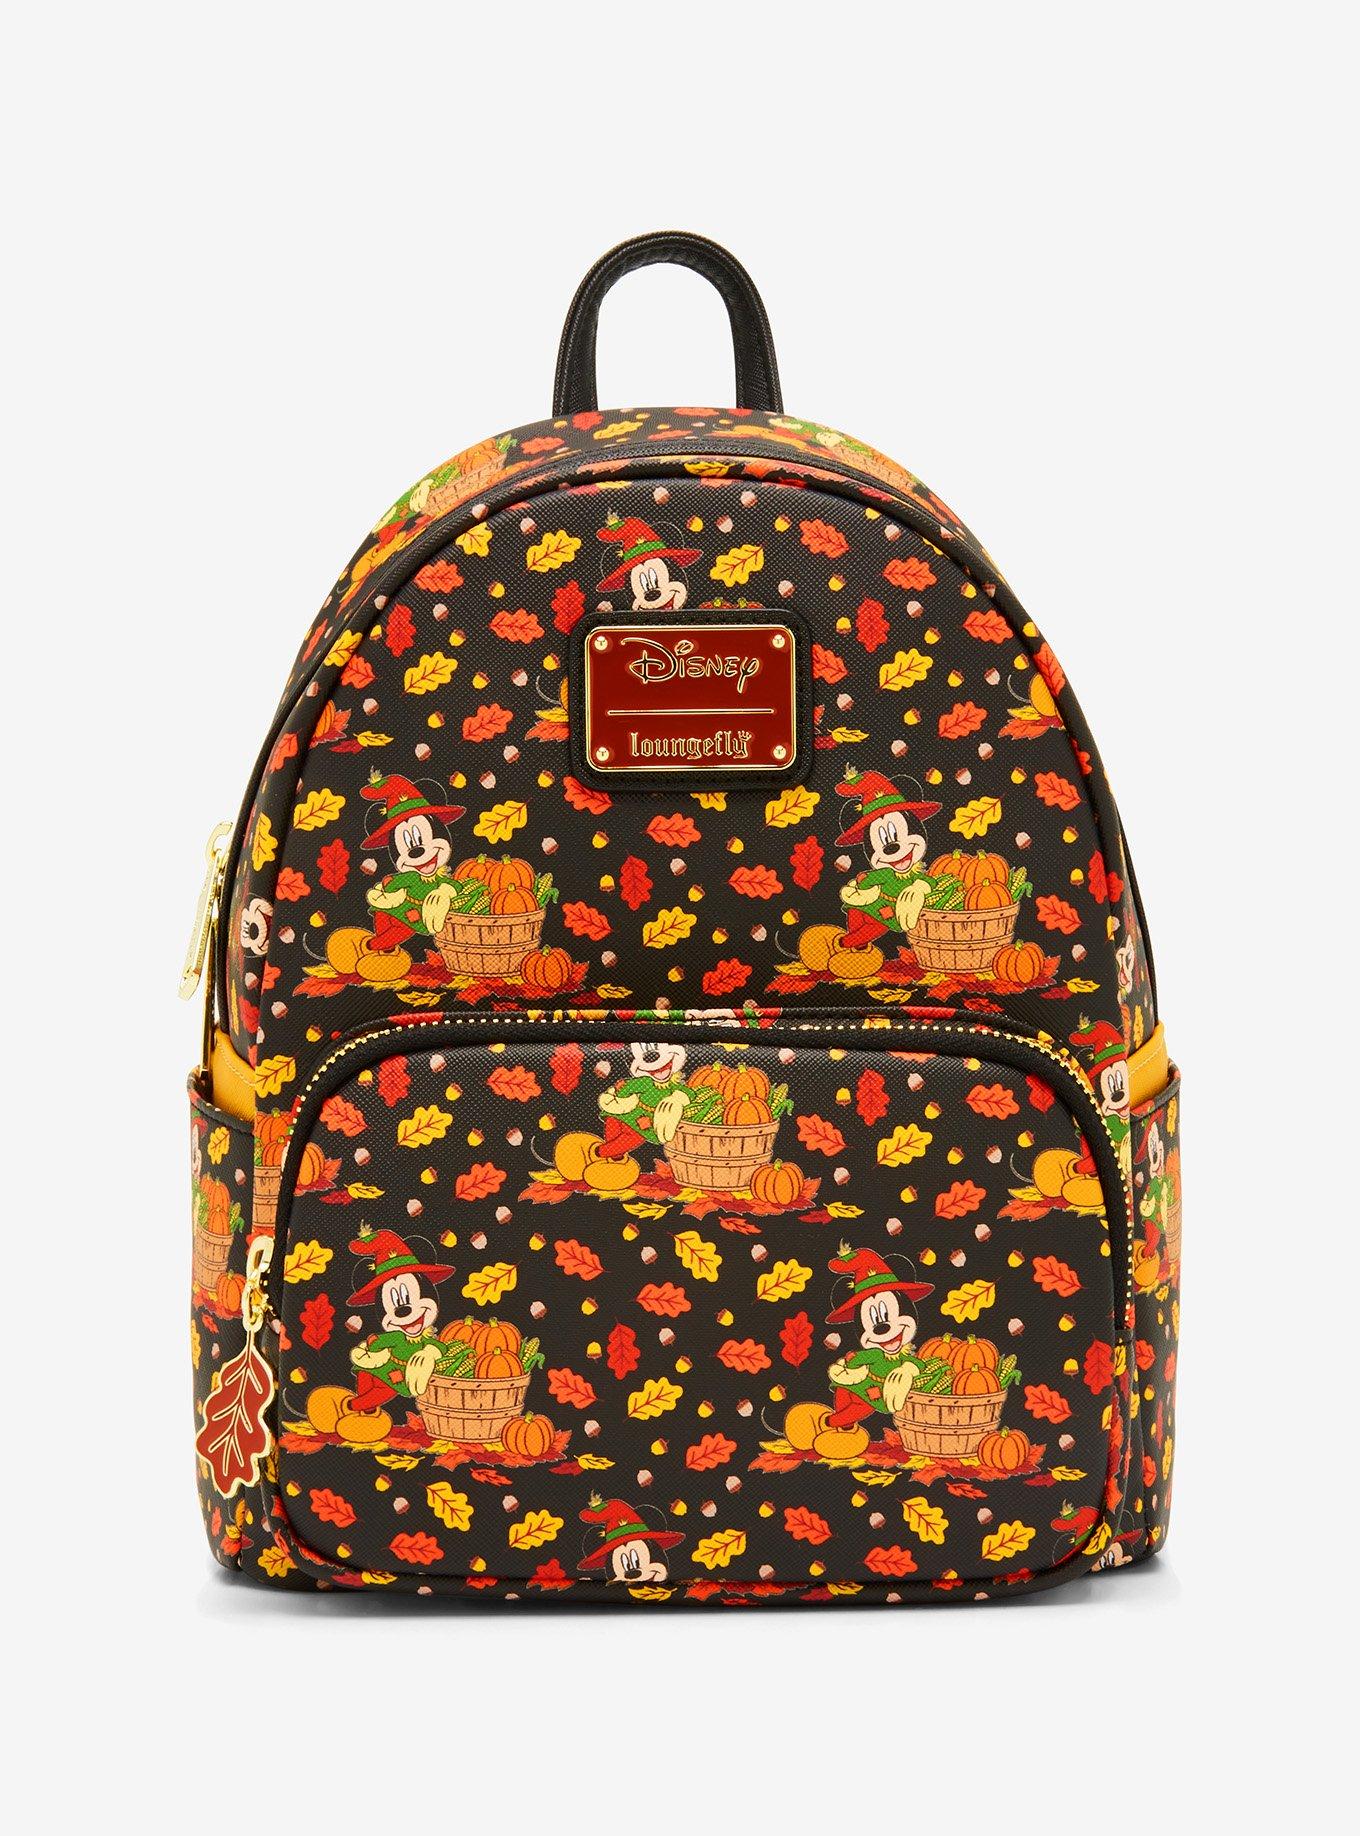 Guess Red Mini Backpack Handbag NWT